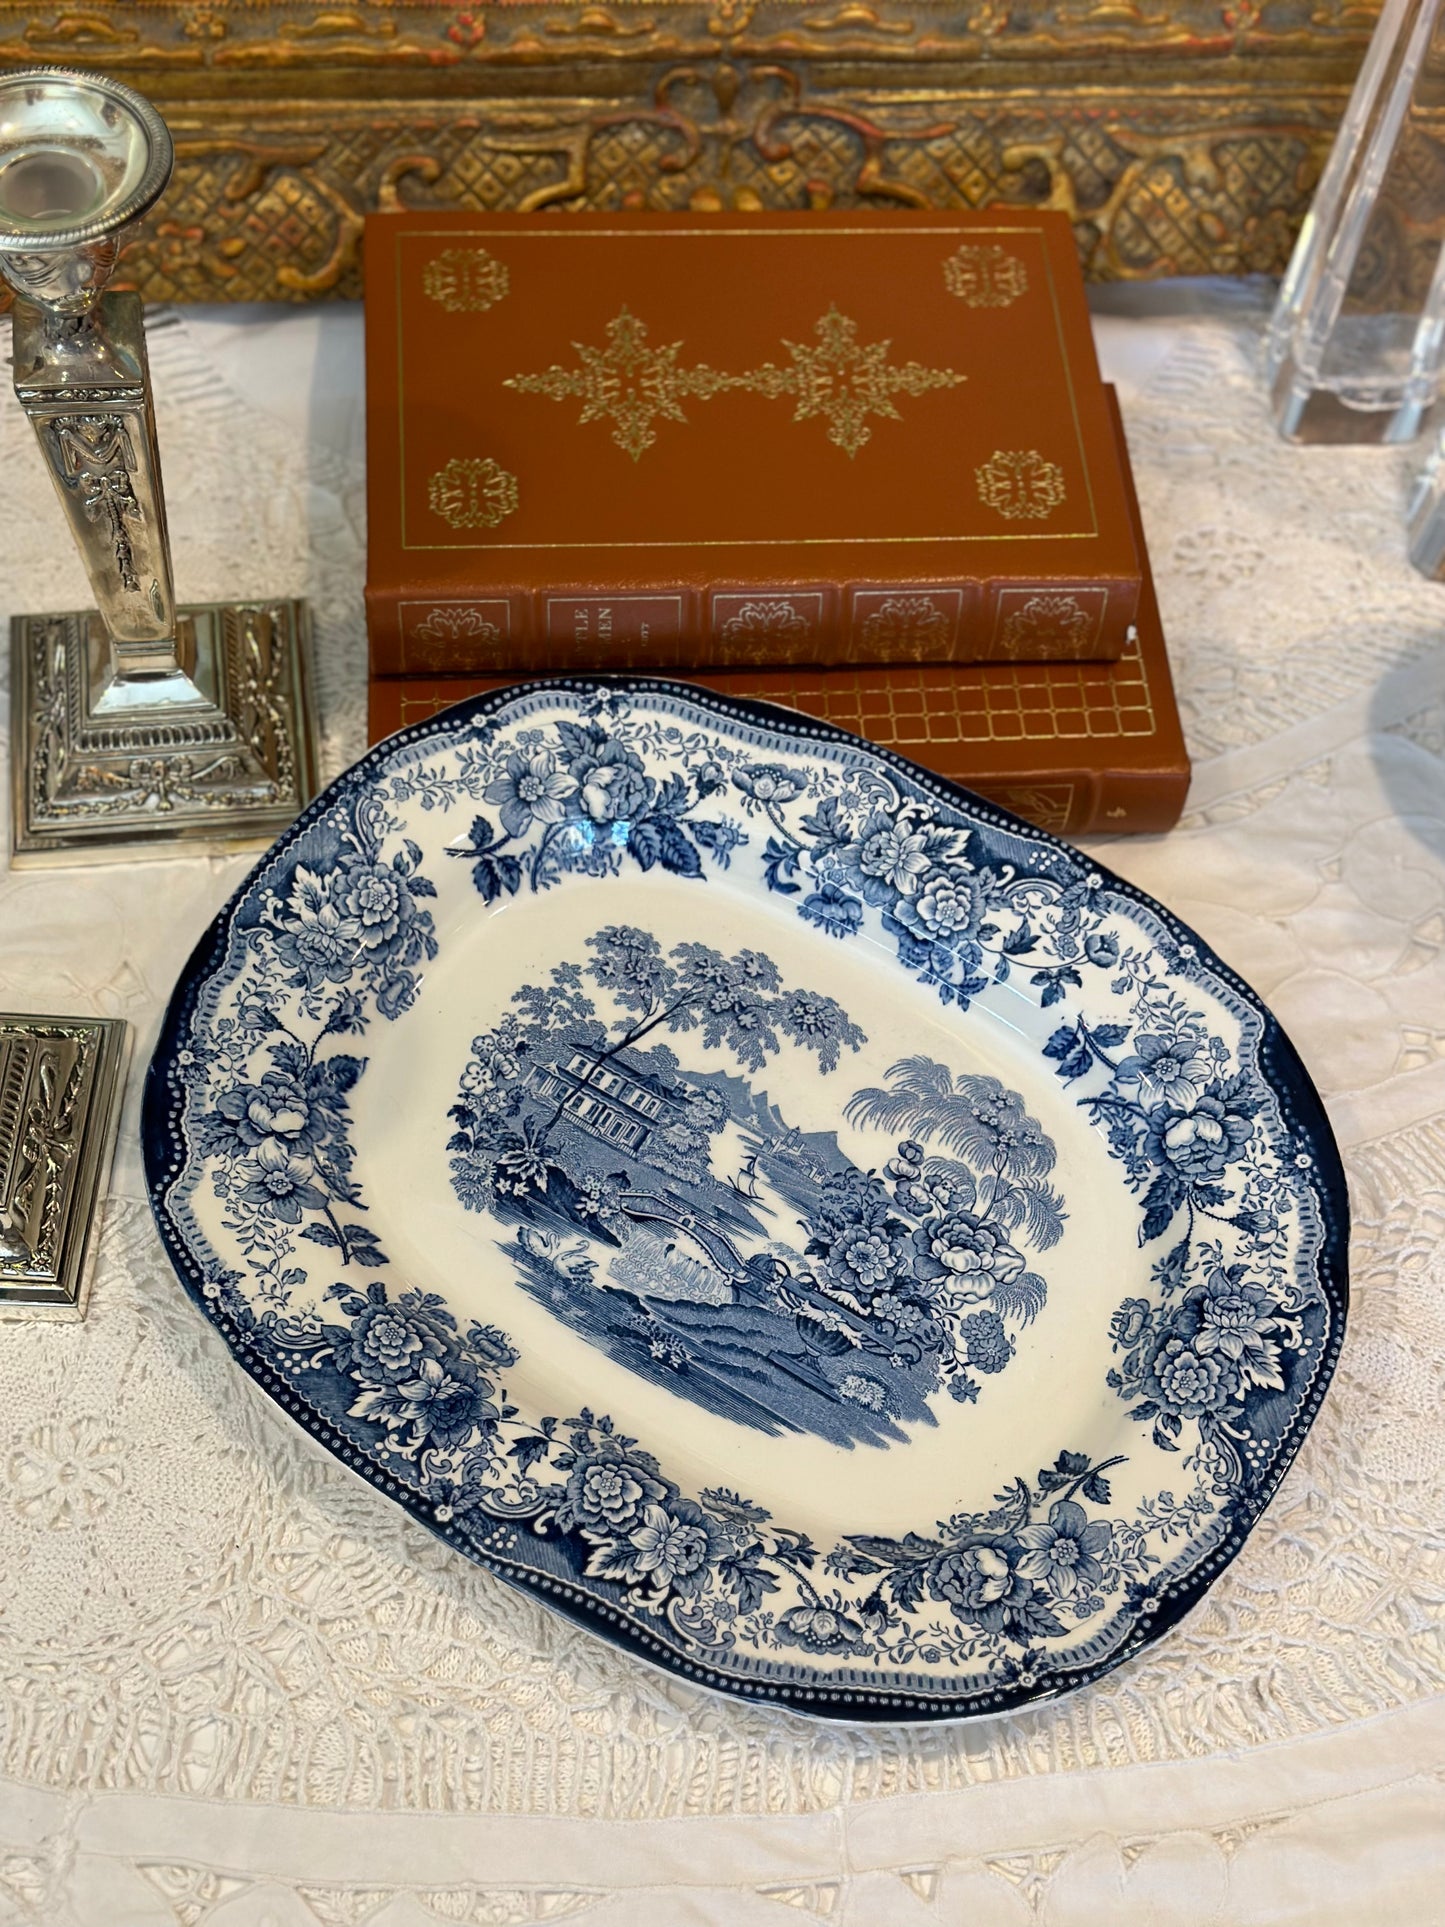 Vintage Blue & White Clarisse Cliff Oval Platter, 14x11" - Pristine!